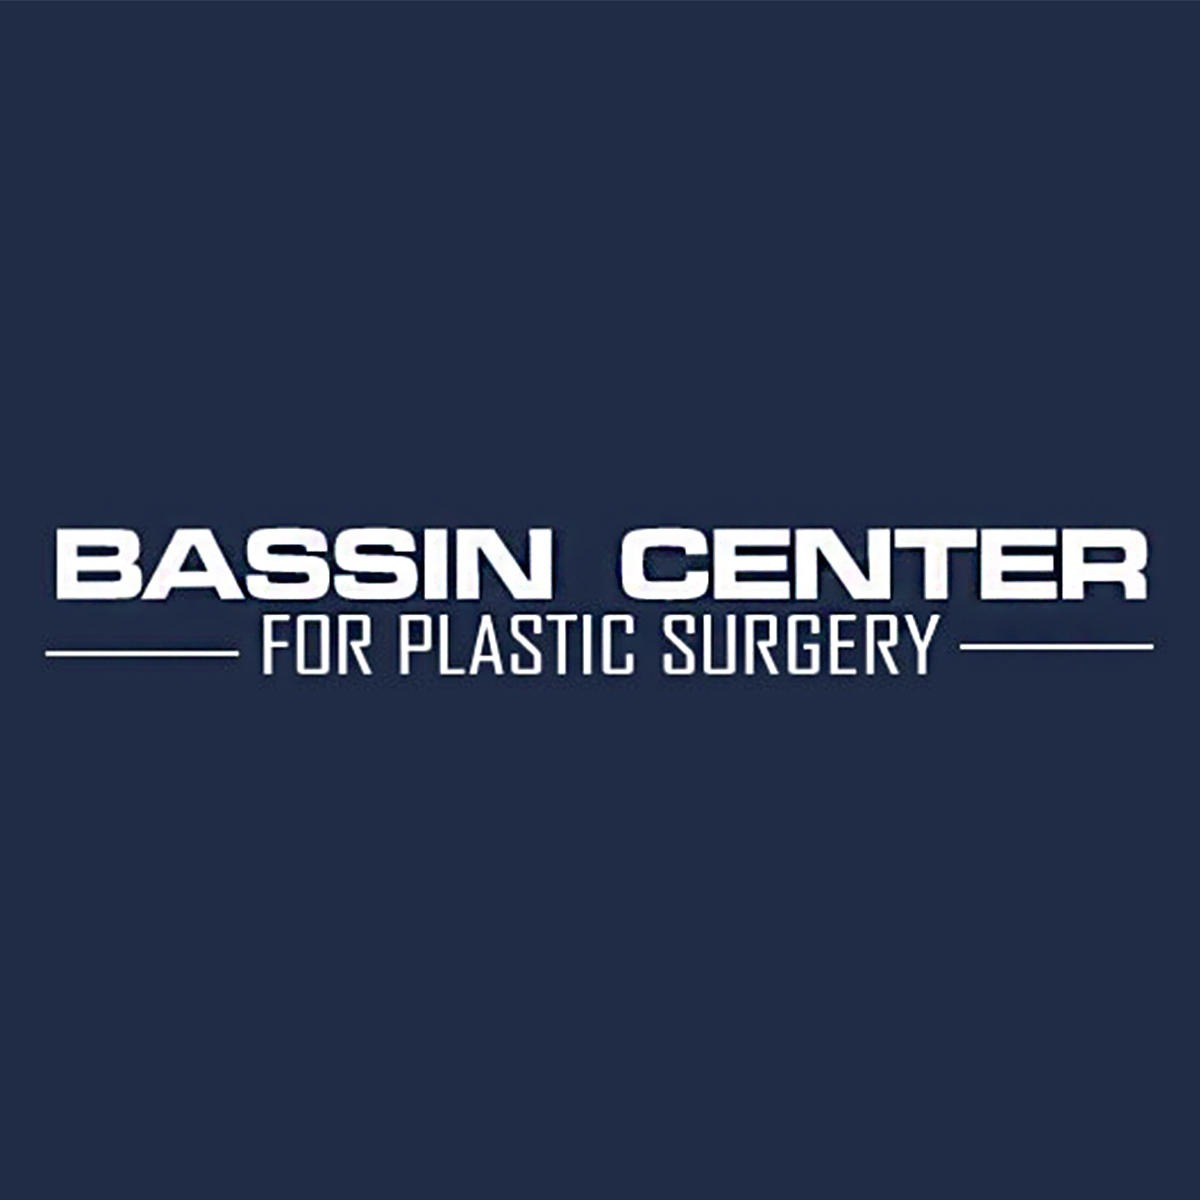 Bassin Center For Plastic Surgery Melbourne - Viera, FL 32940 - (321)677-7151 | ShowMeLocal.com